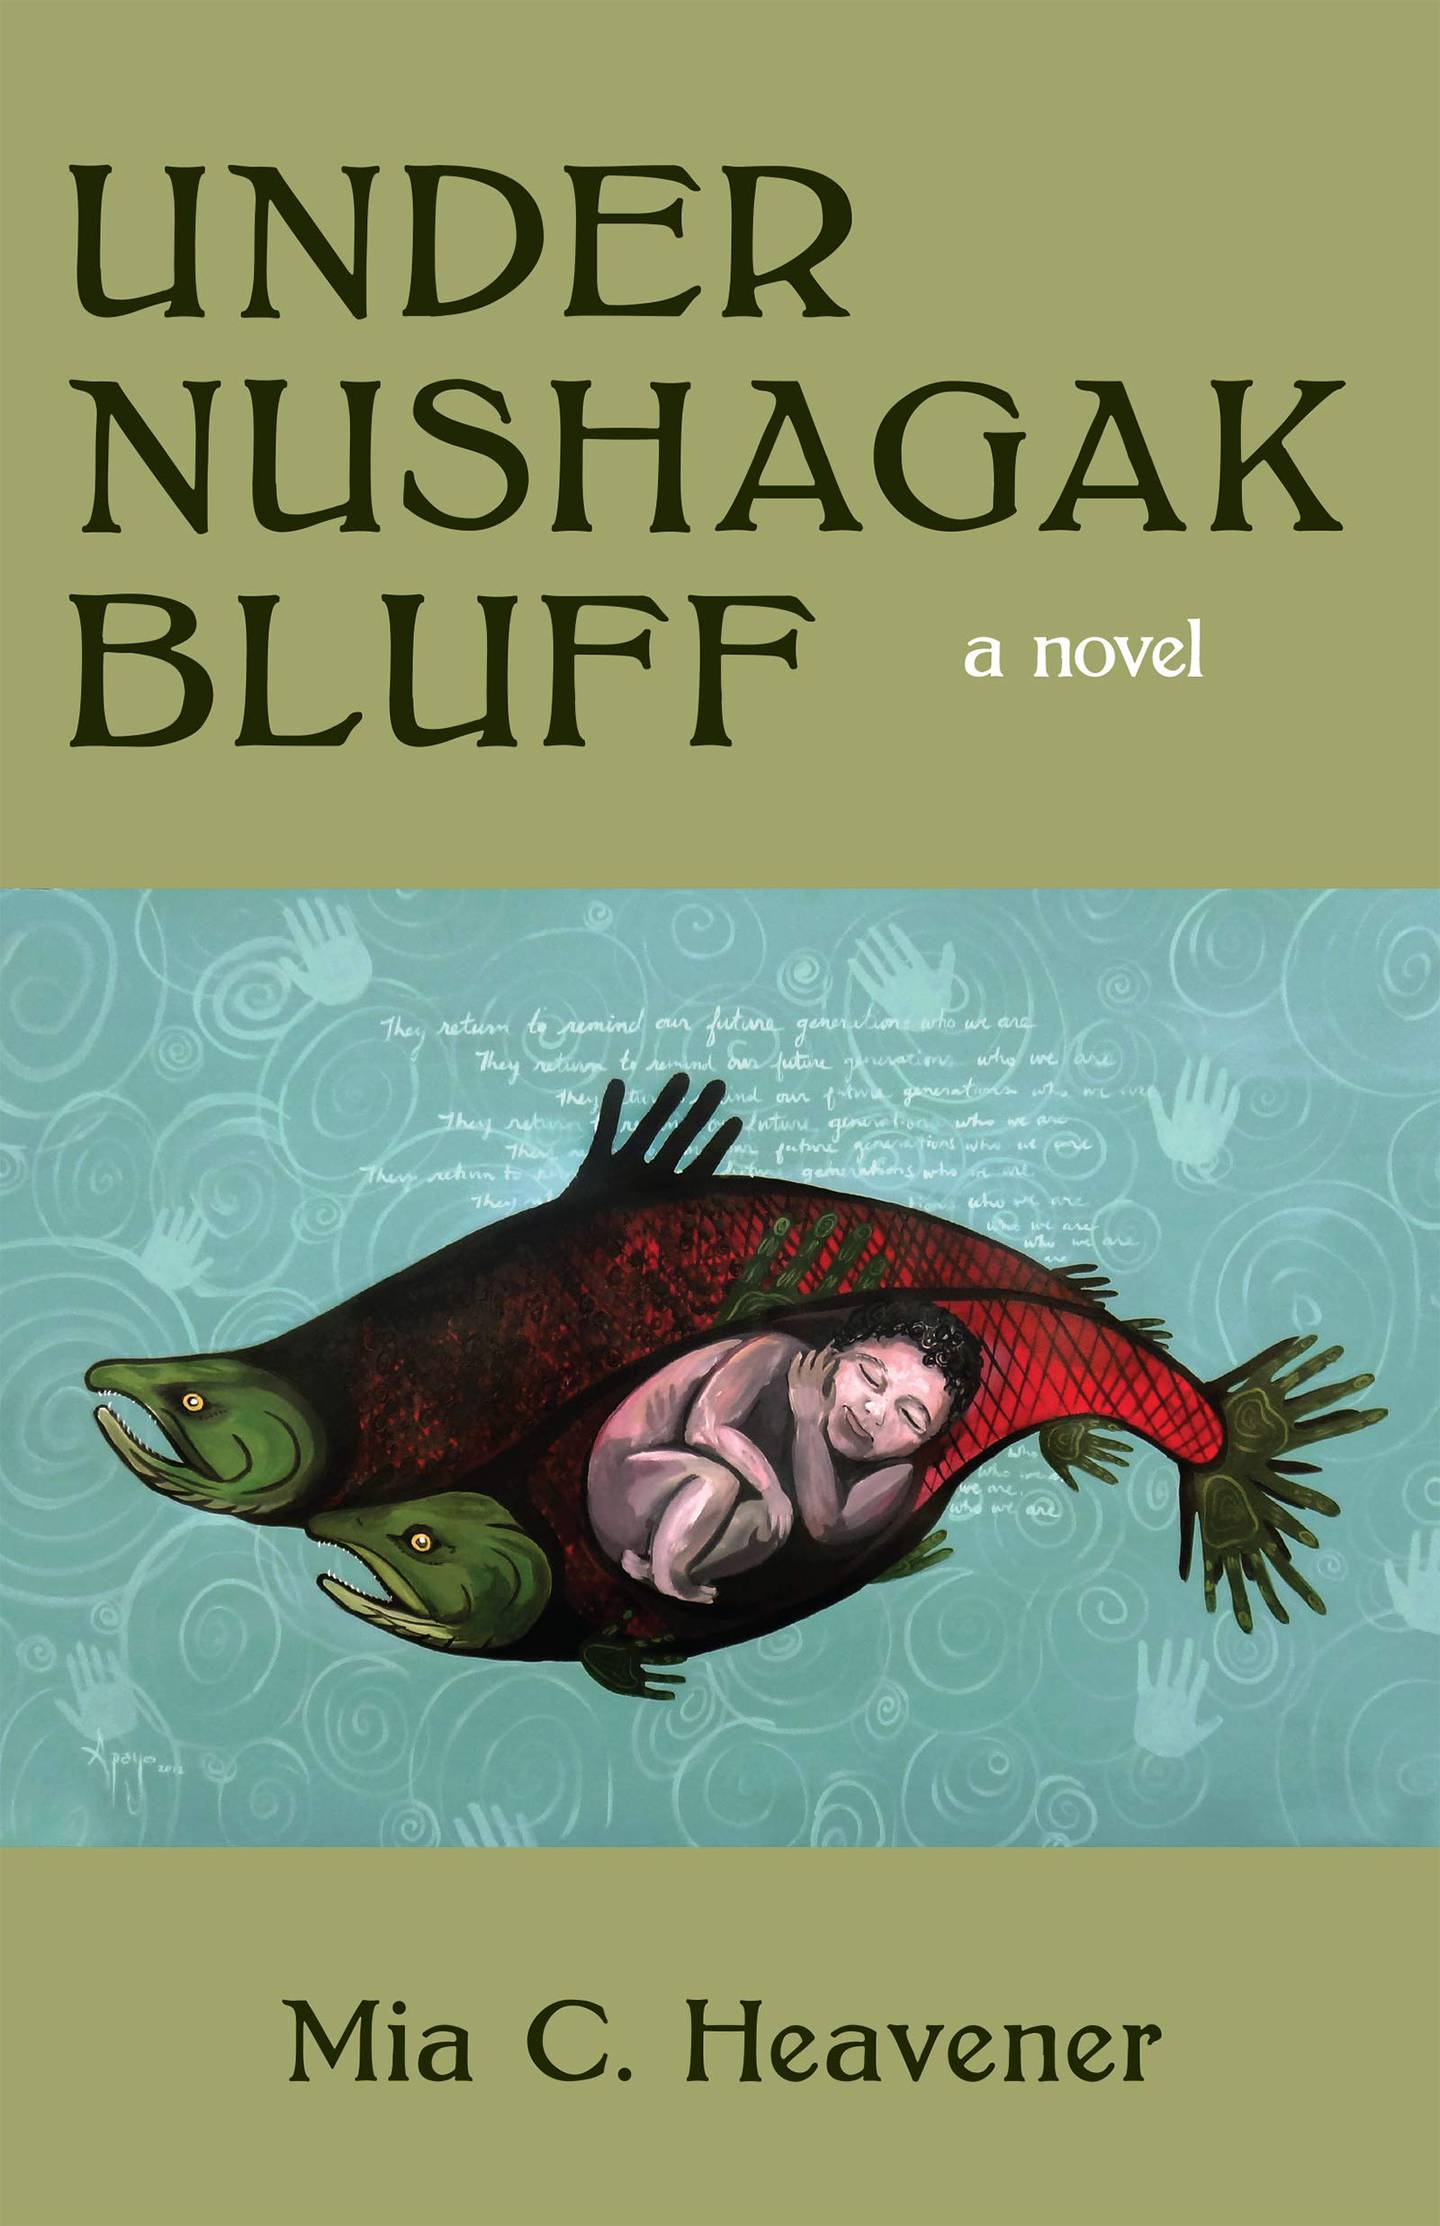 "Under Nushagak Bluff," by Mia C. Heavener